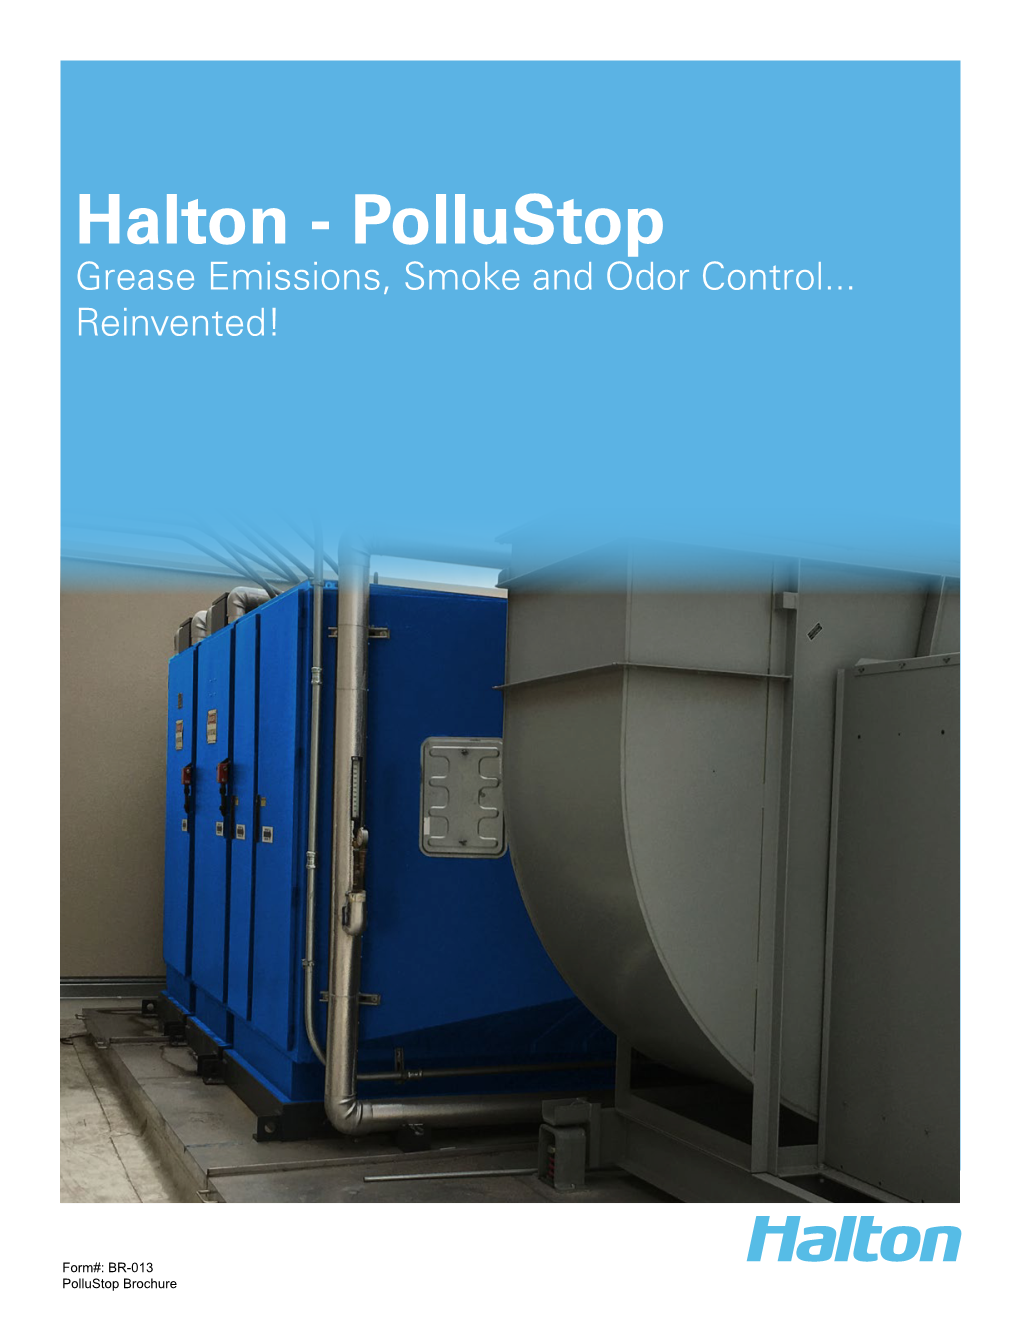 Halton - Pollustop Grease Emissions, Smoke and Odor Control